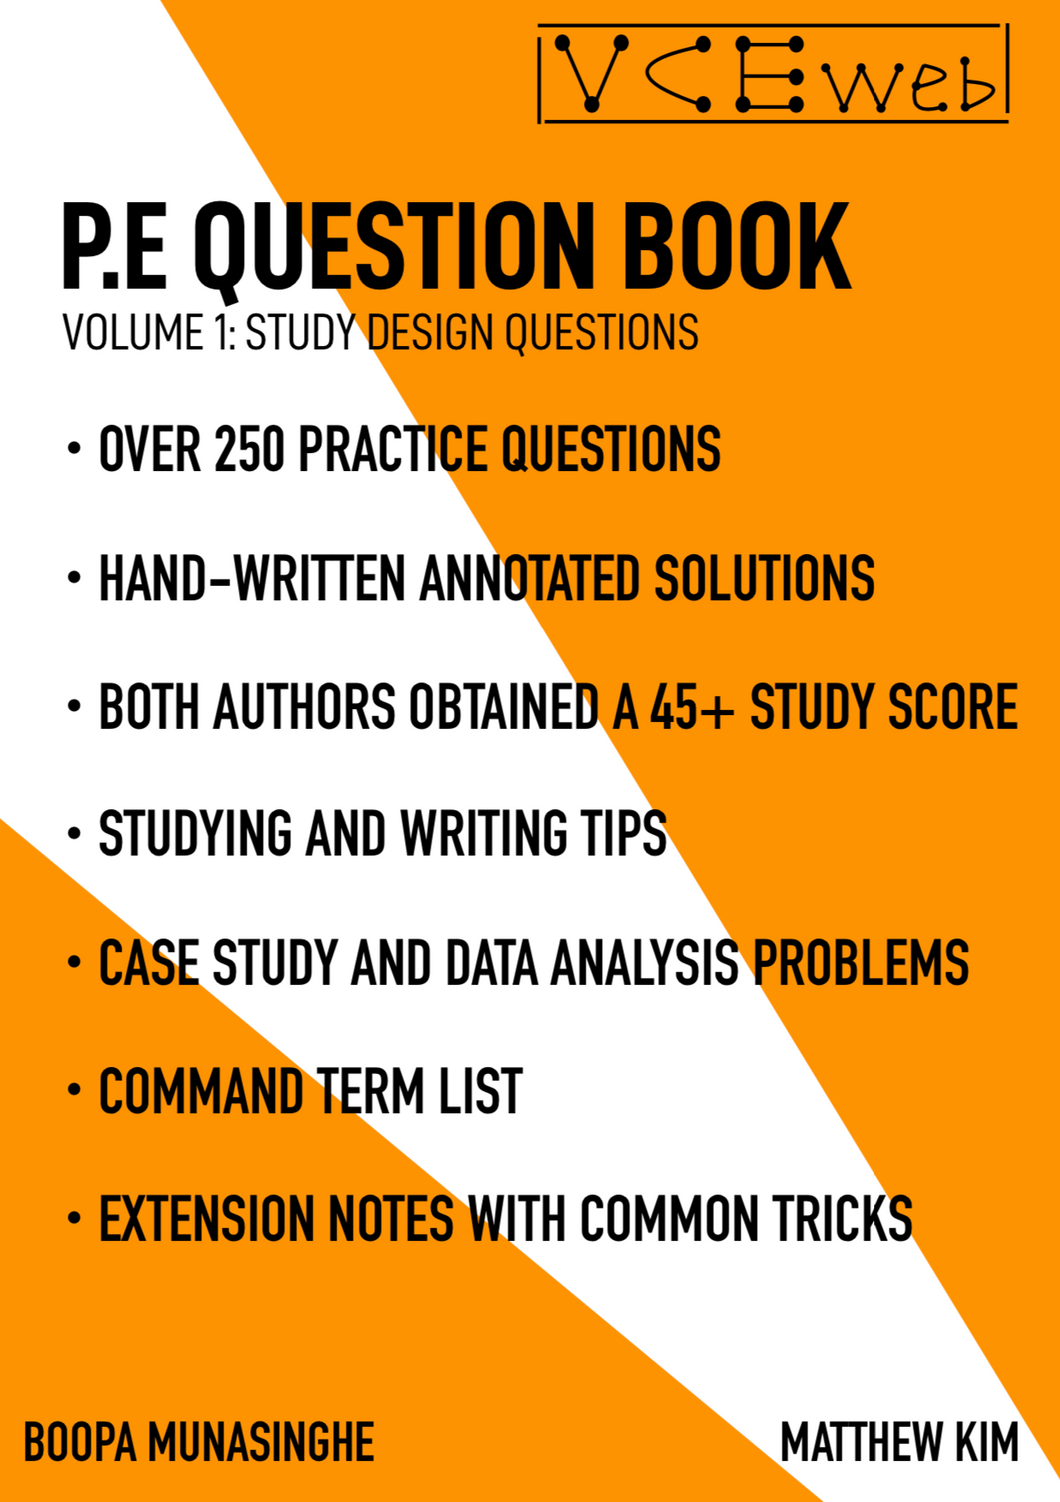 P.E Question Book | VCEWeb